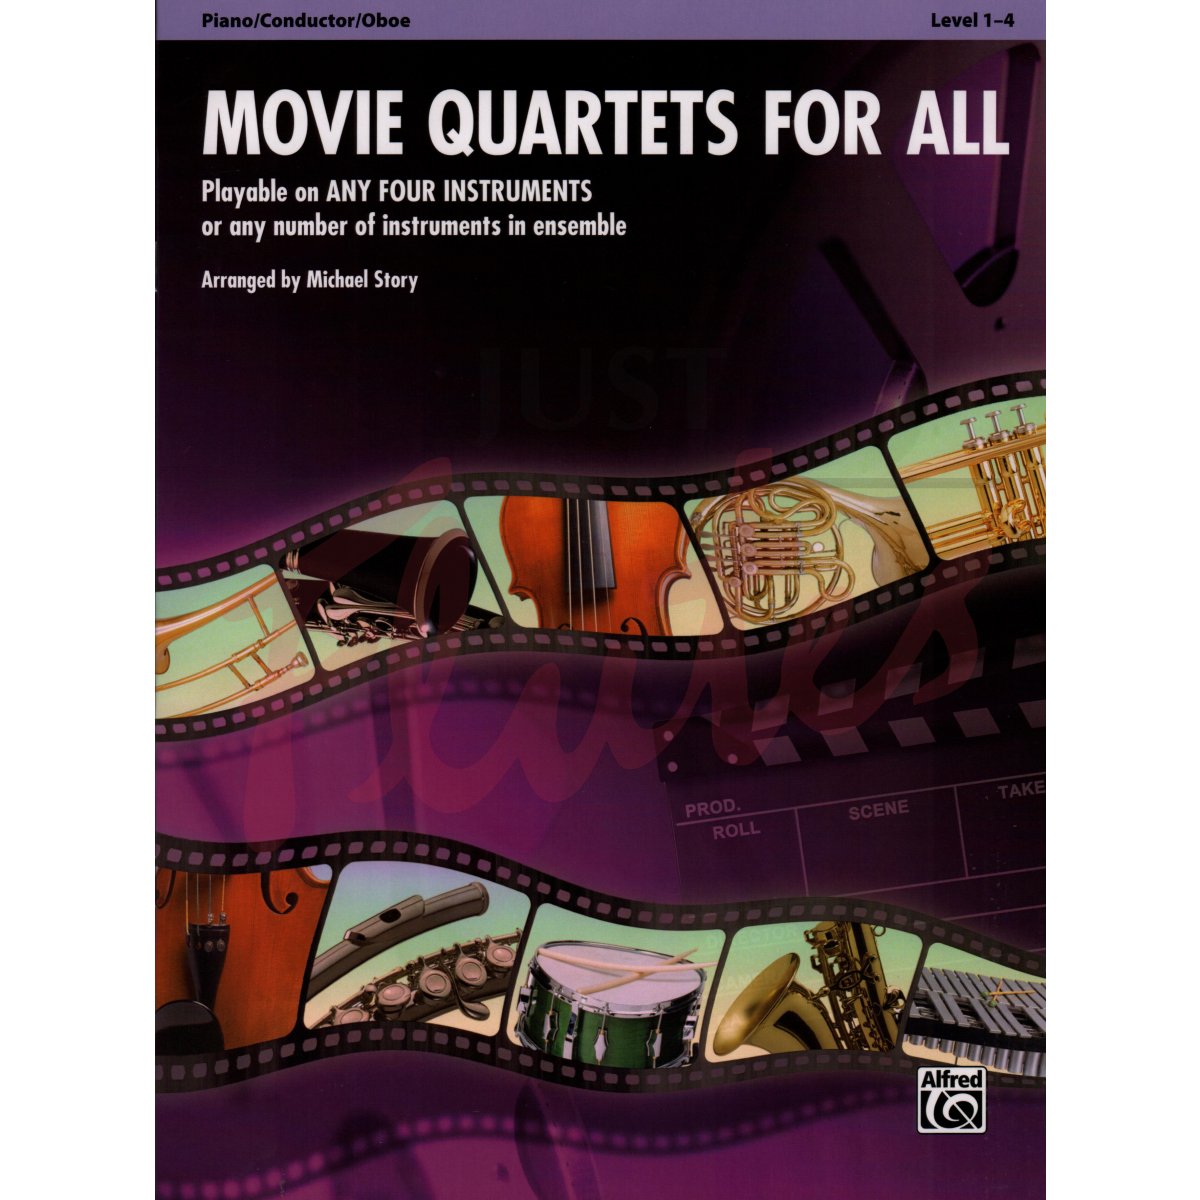 Movie Quartets for All [Oboe/Piano Accompaniment Book]